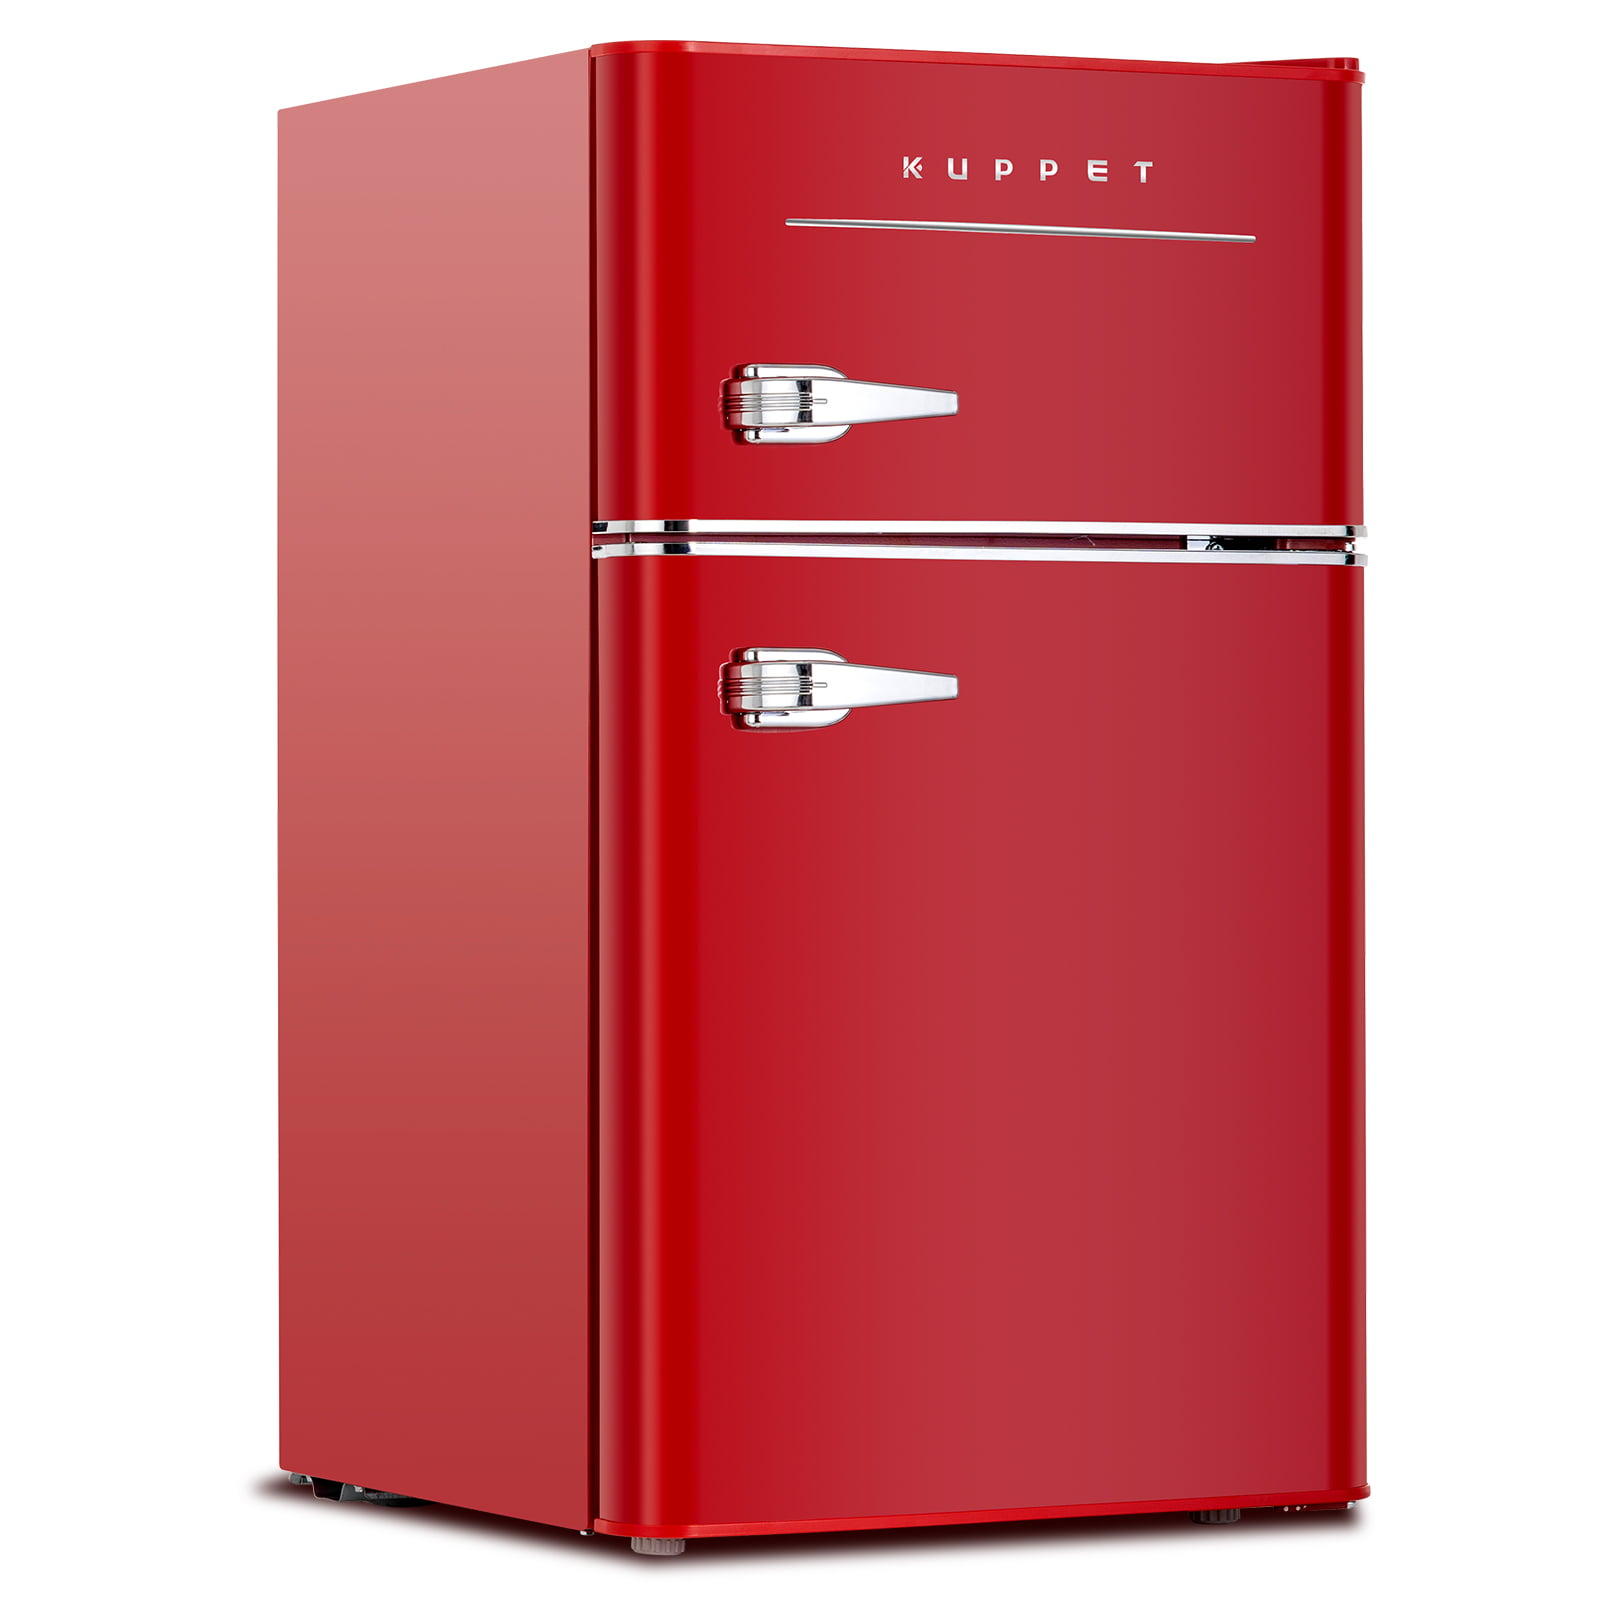 KUPPET Retro Mini Refrigerator 2-Door Compact Refrigerator for Dorm ...